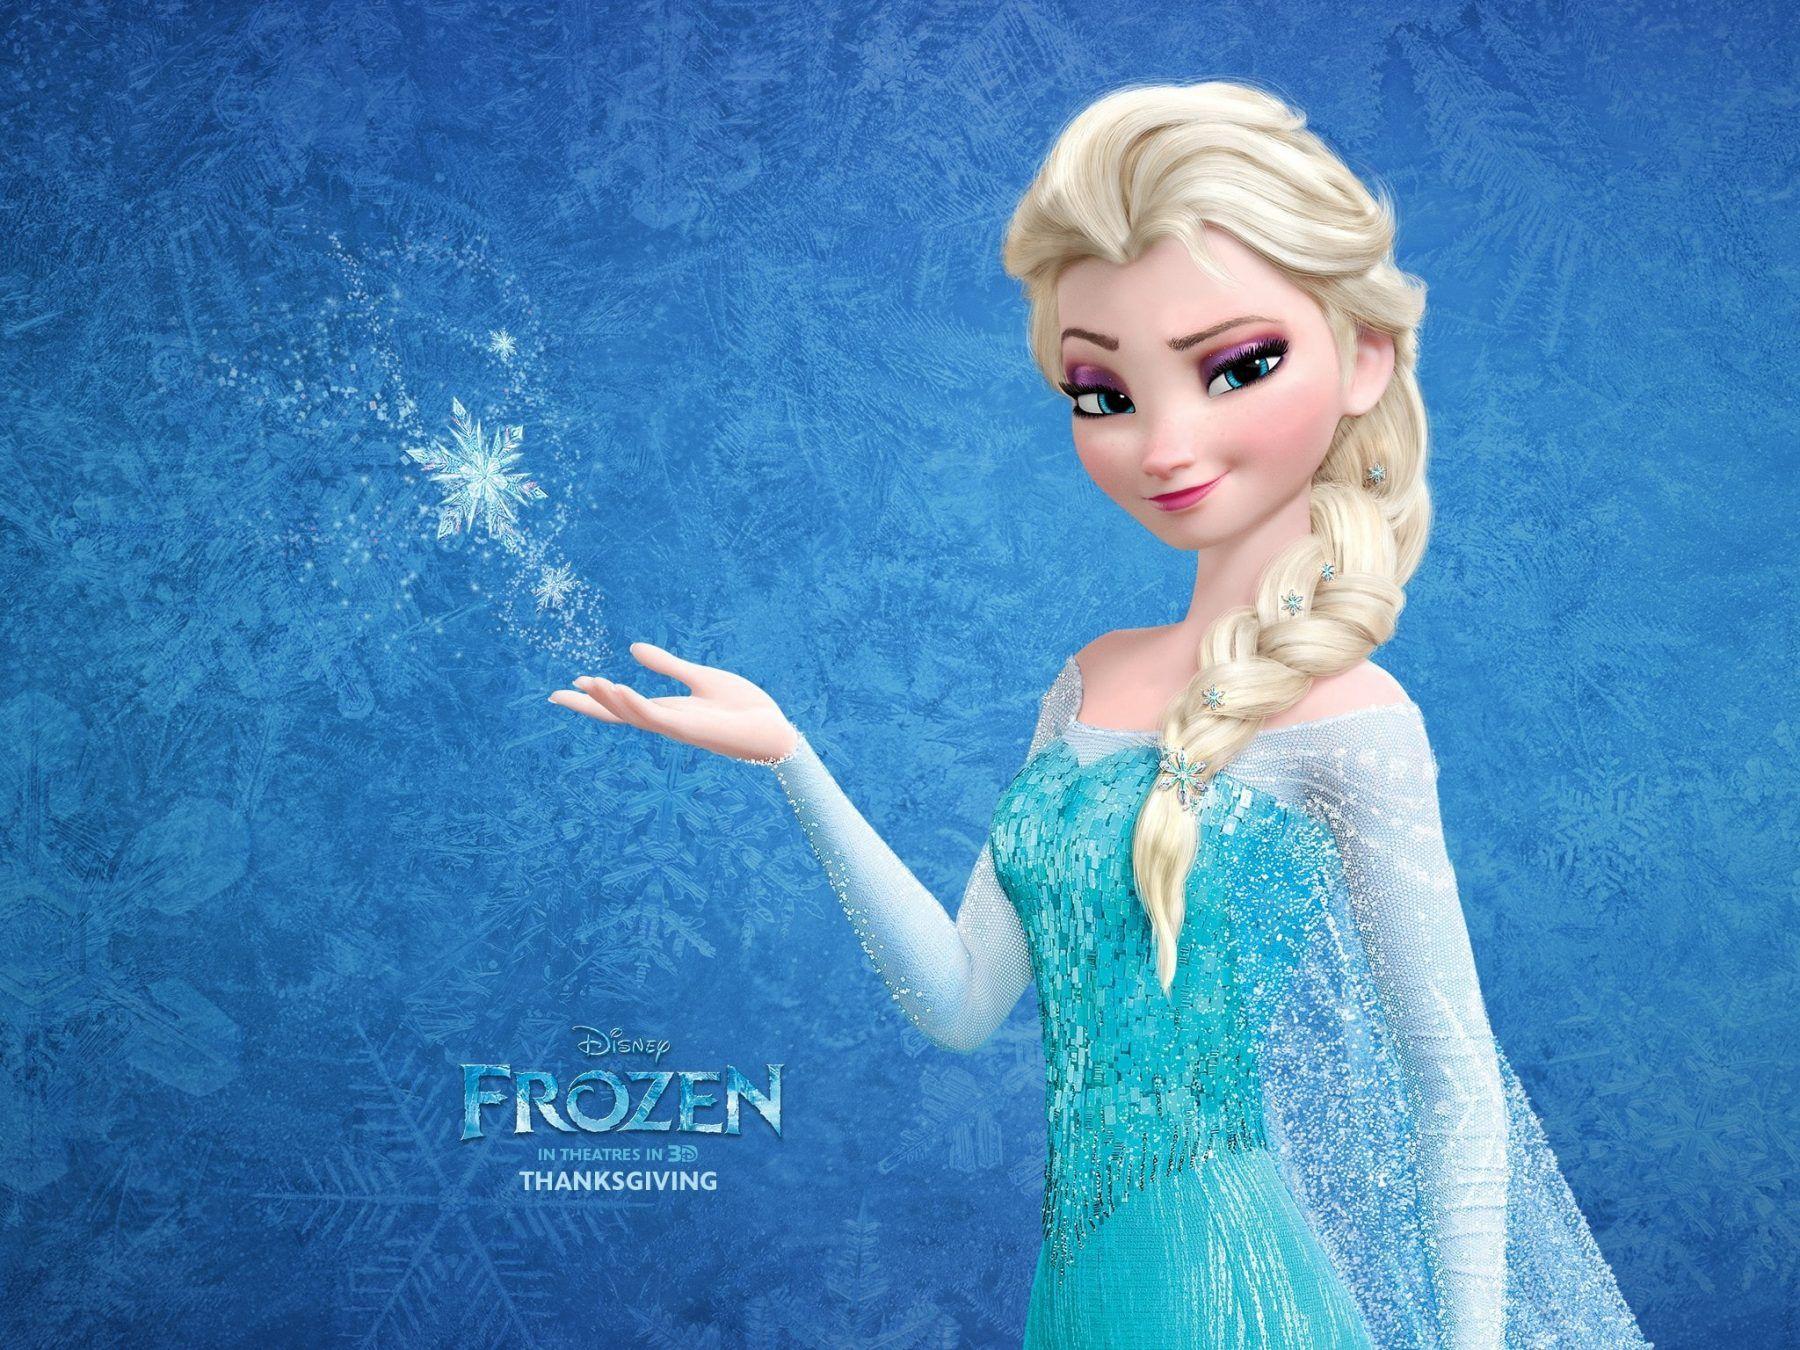 Frozen 2 HD Wallpaperwallpaper.net. Disney